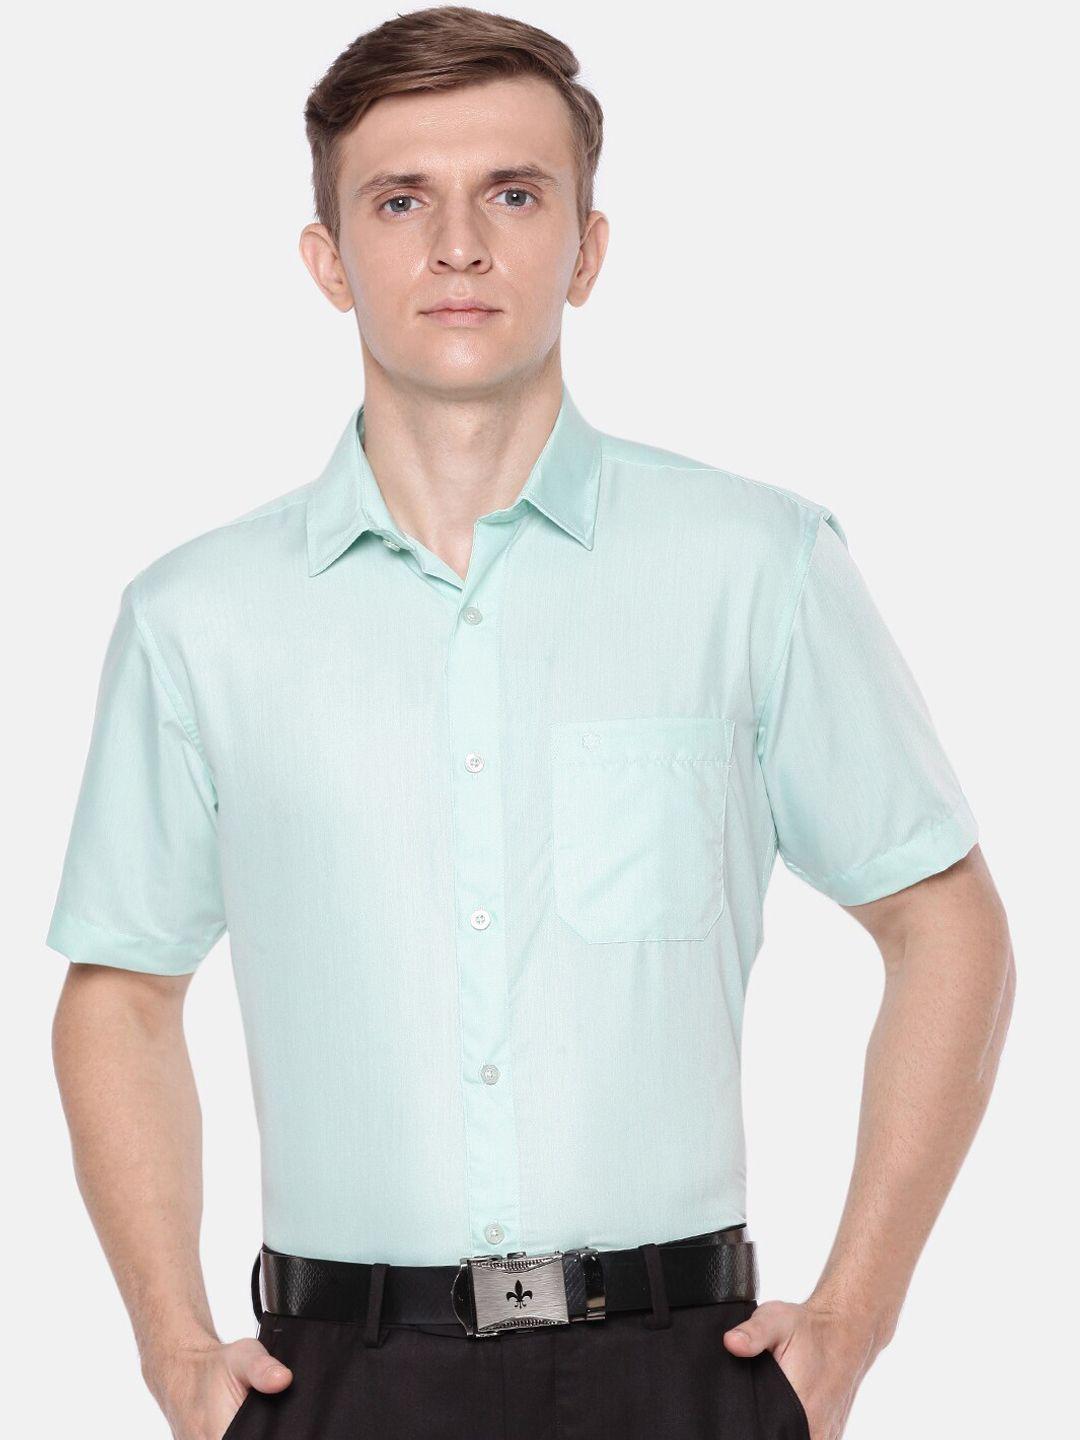 jansons men green regular fit solid formal shirt